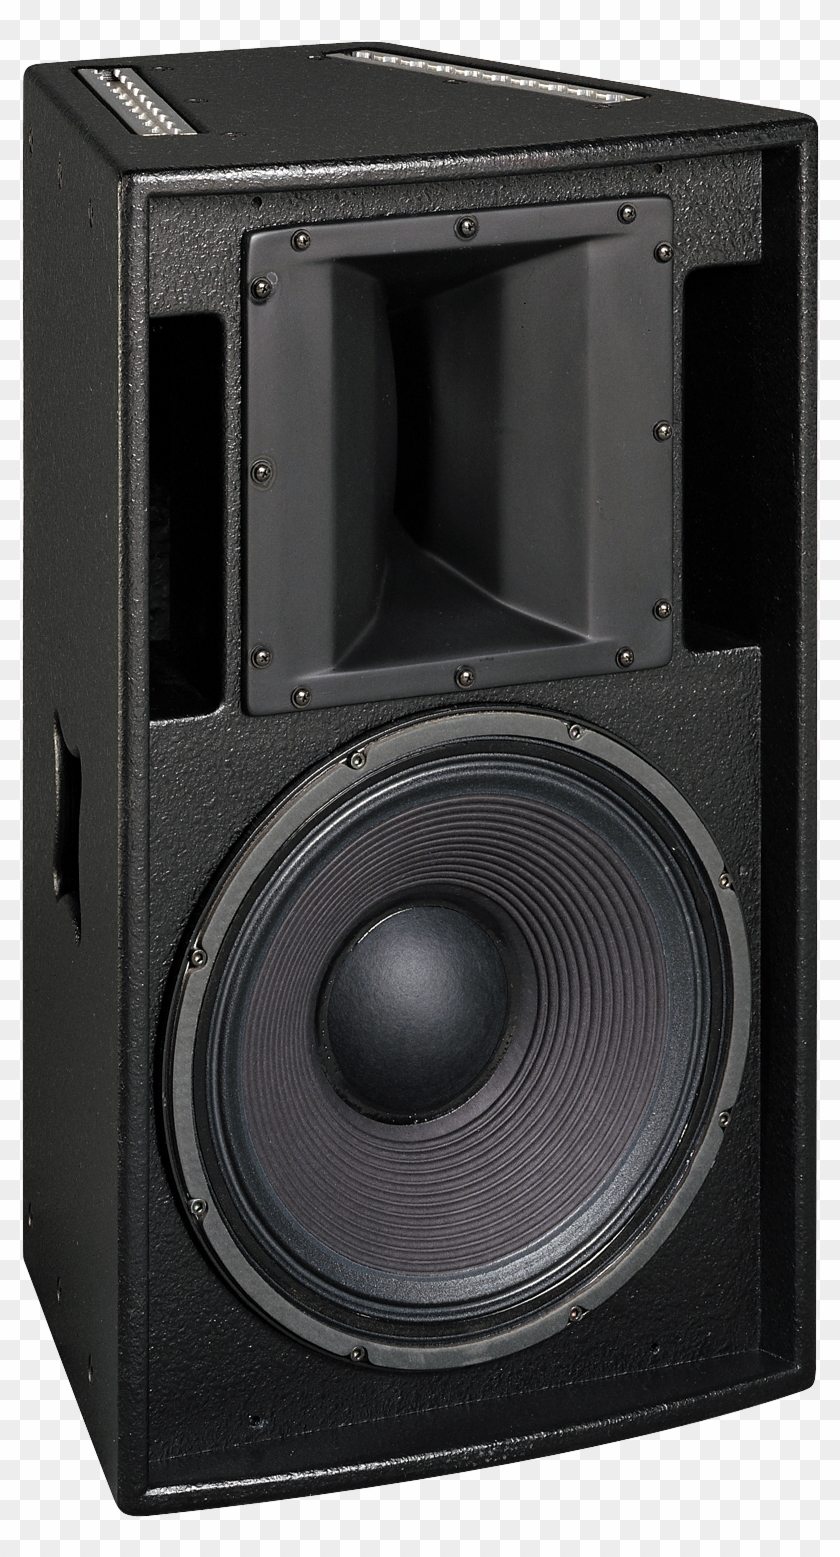 Audio Speaker - Sound Box Png Clipart #518003